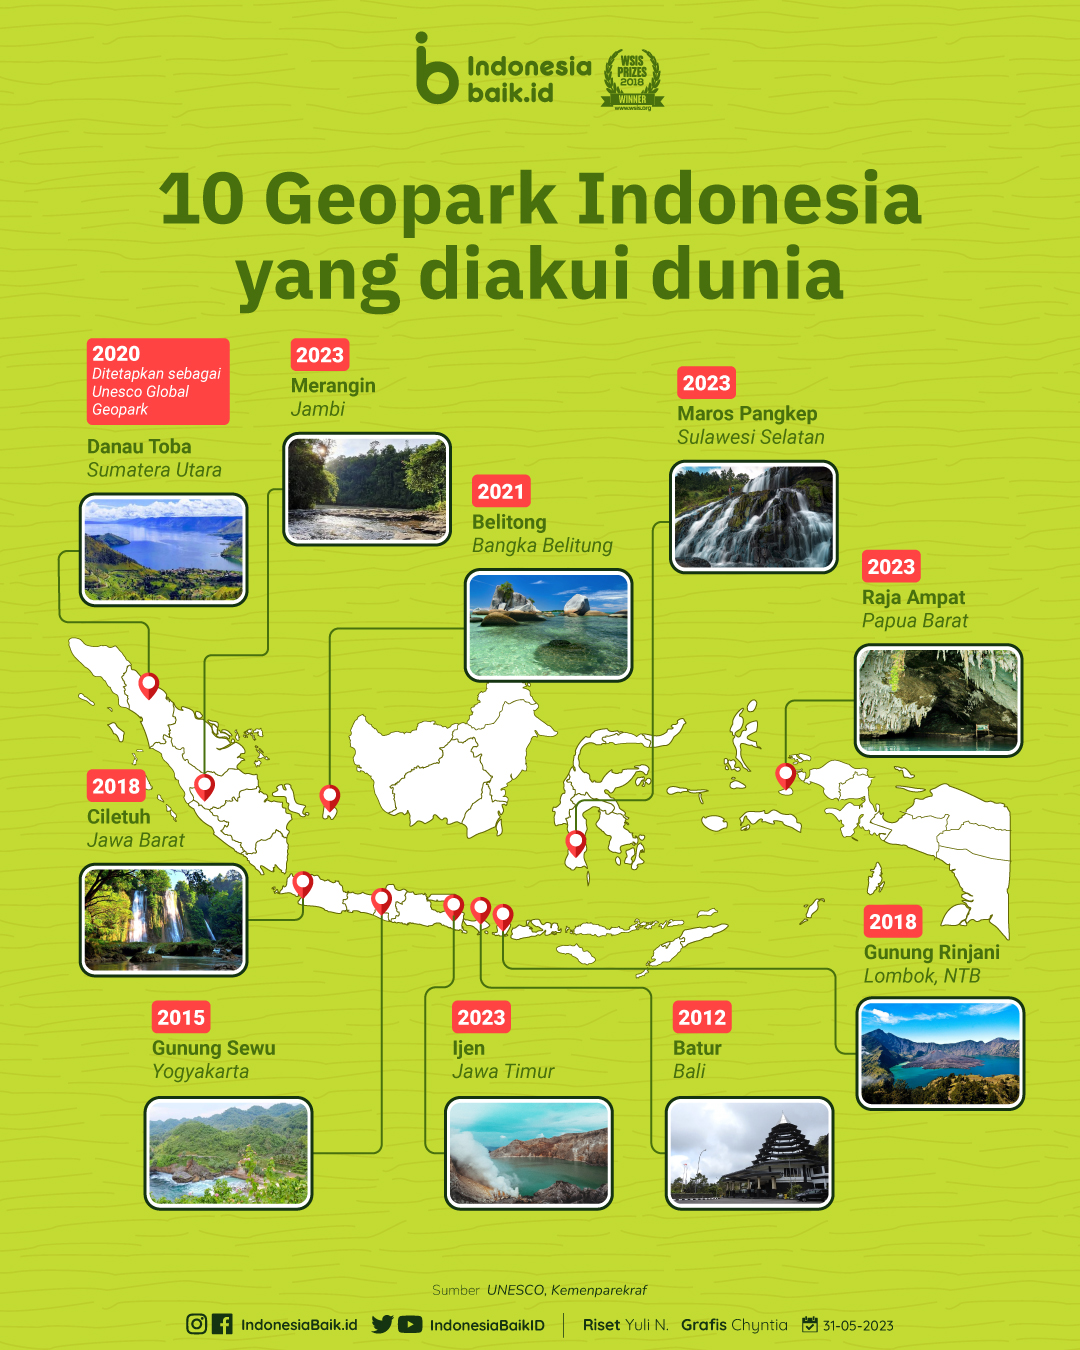 10 Geopark Global UNESCO yang ada di Indonesia